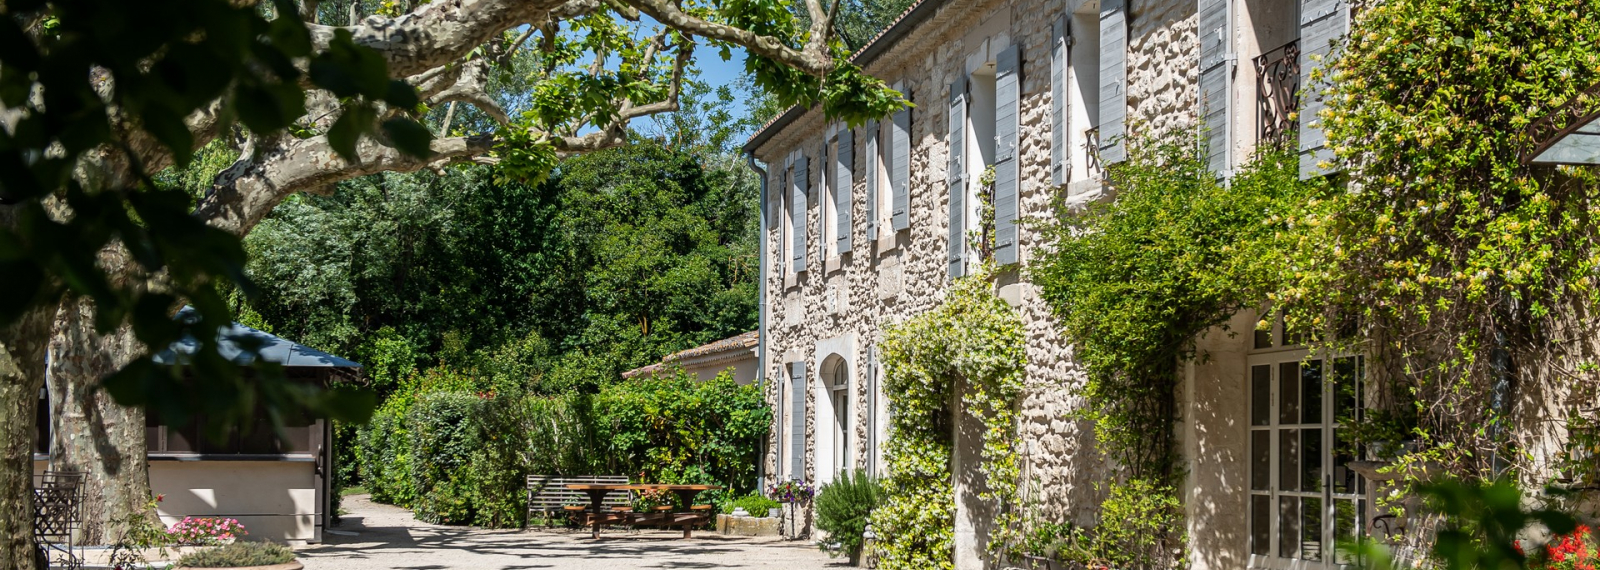 Hôtel Mas de Valentine Saint-Rémy-de-Provence_Façade